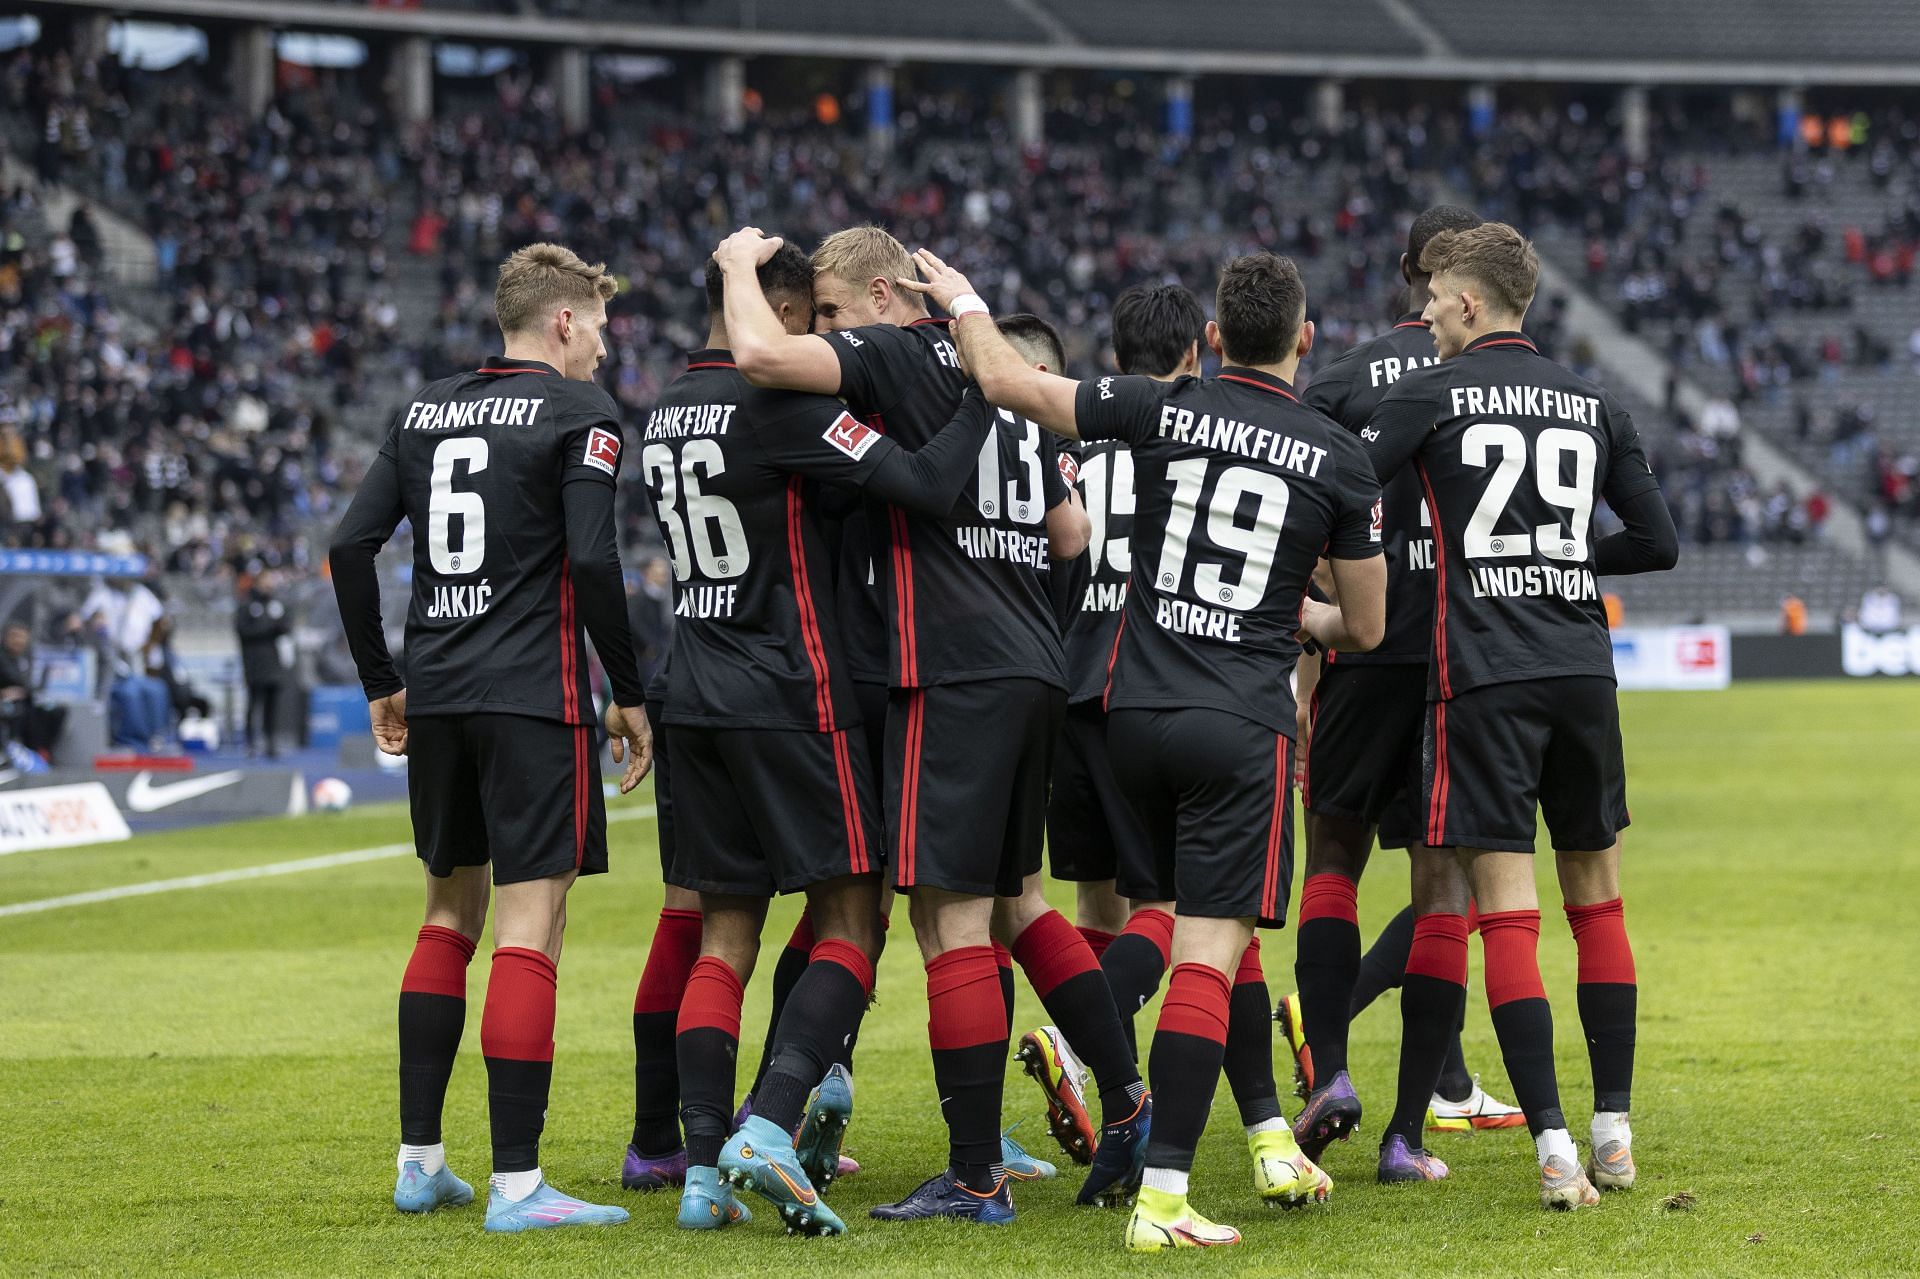 Eintracht Frankfurt will host Bochum on Sunday - Bundesliga